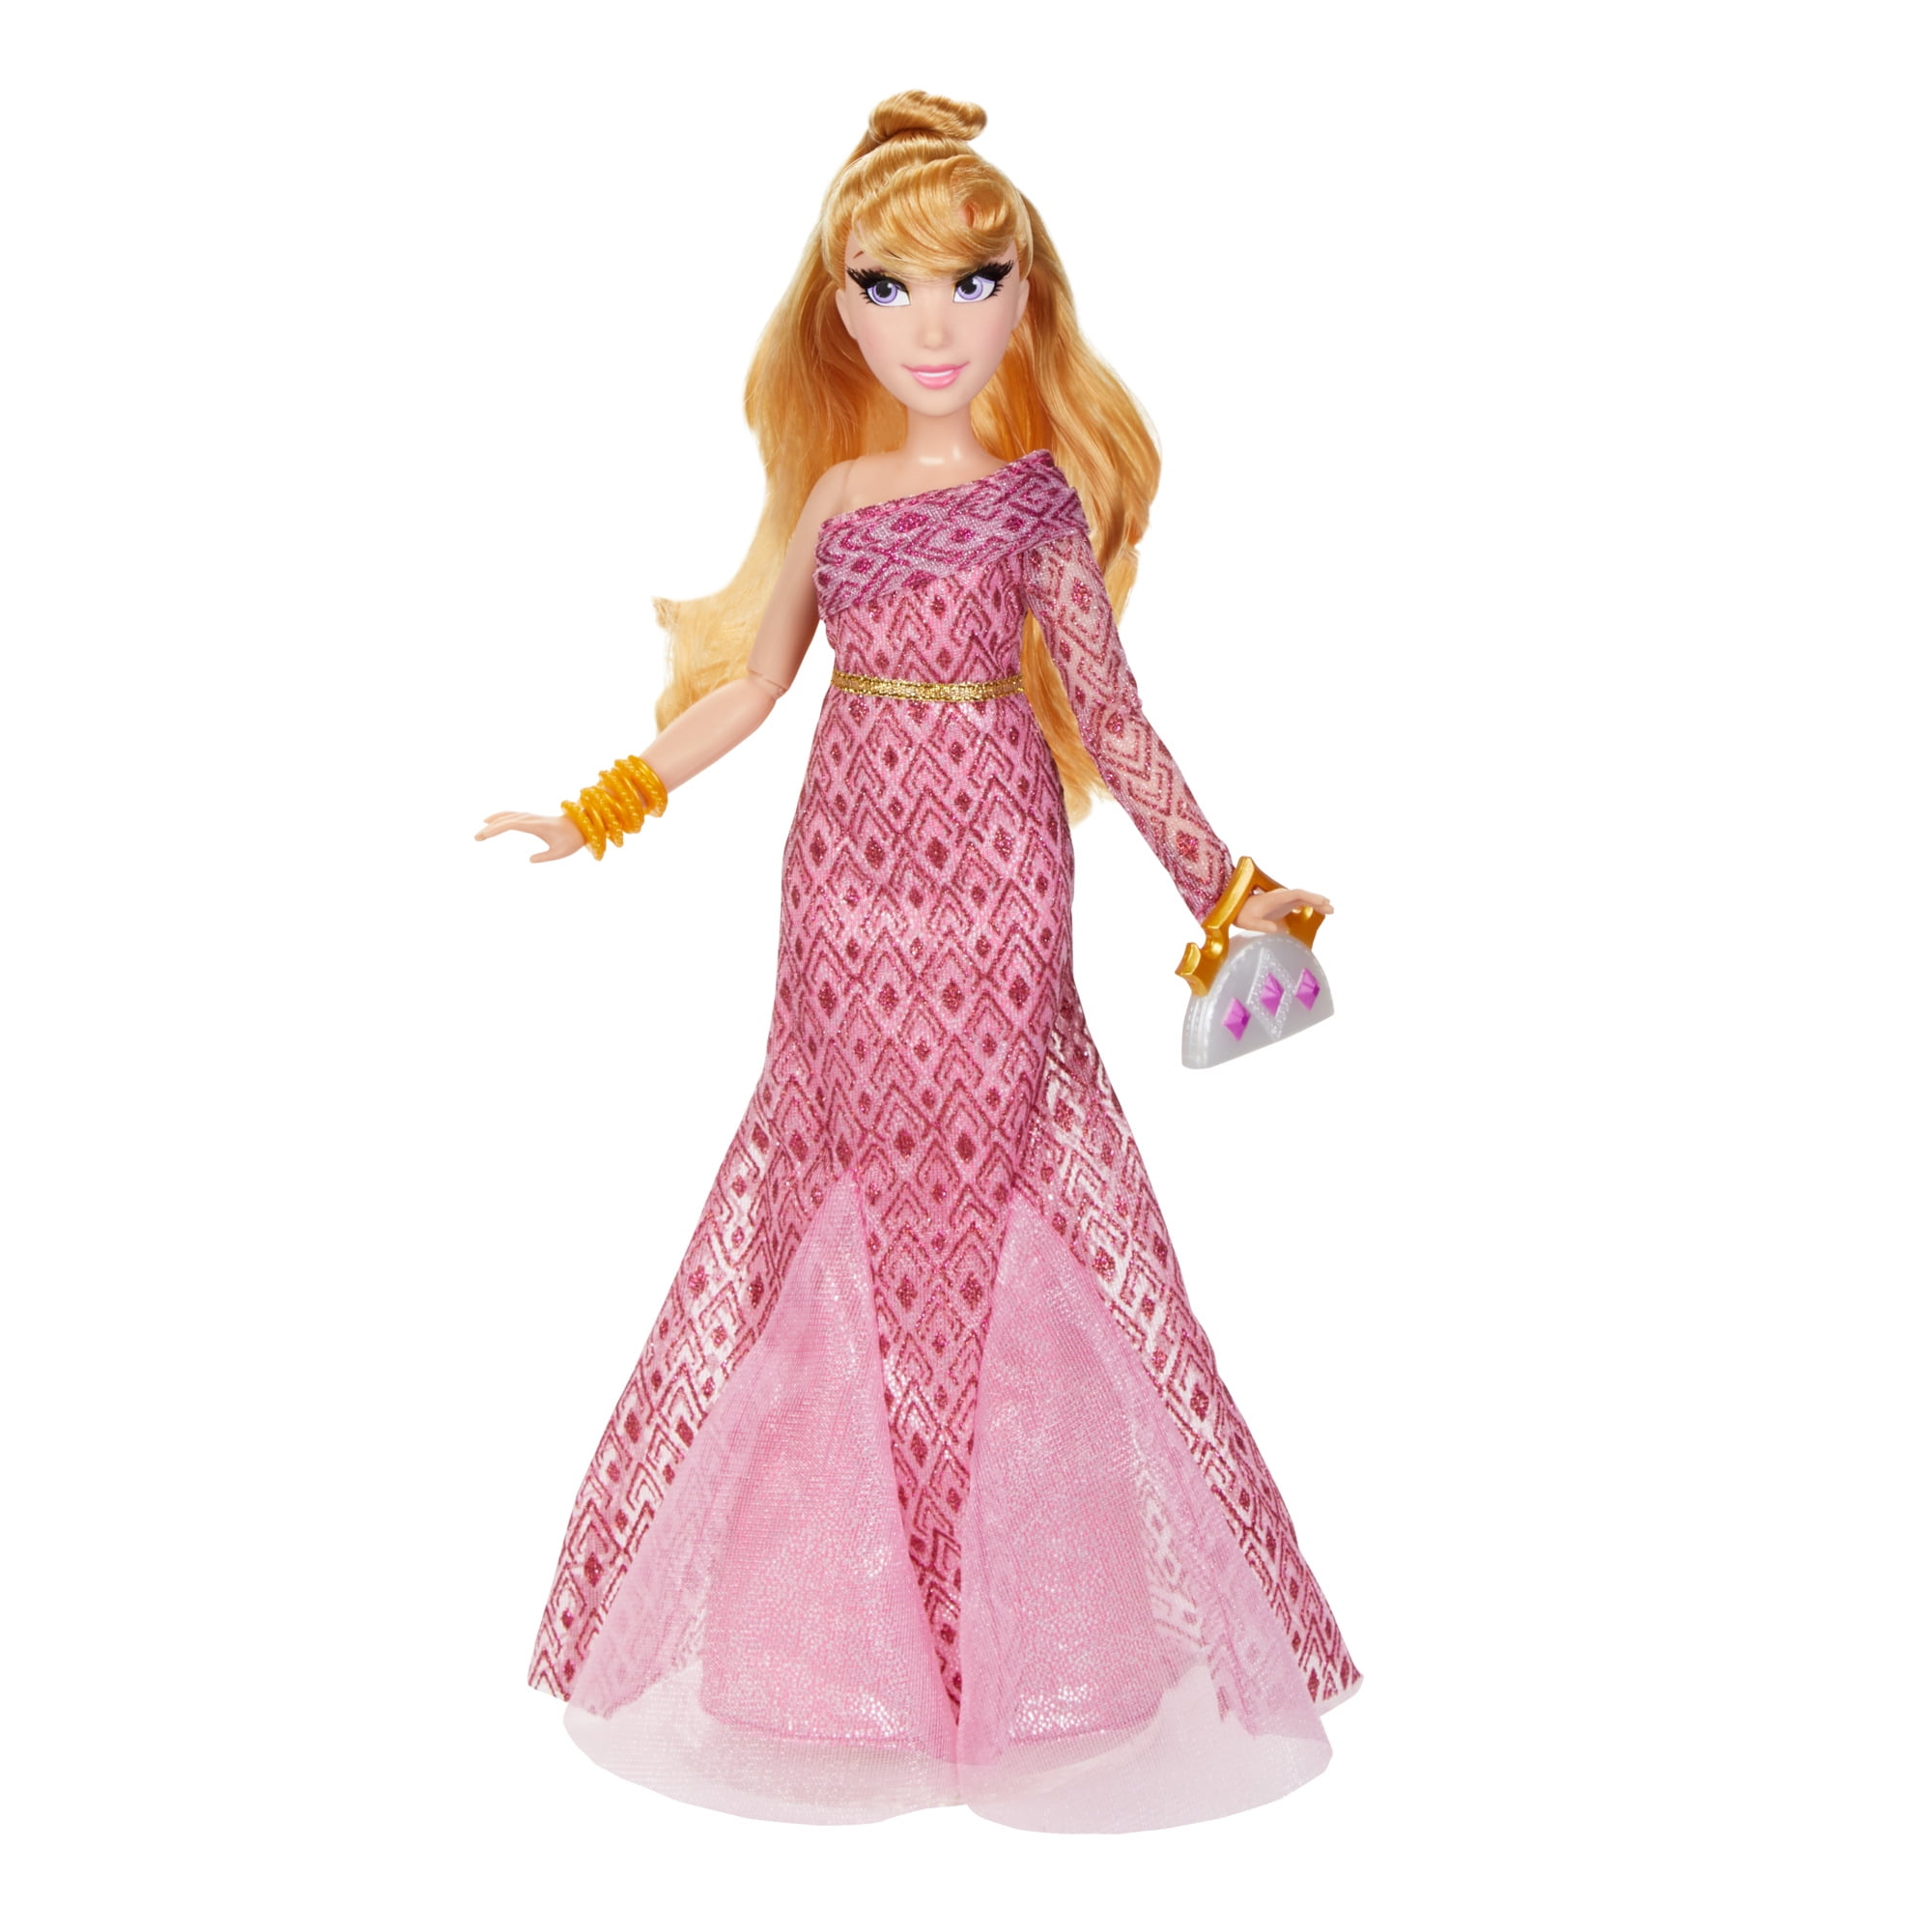 DIsney Princess Style Series Aurora, Includes Accessories